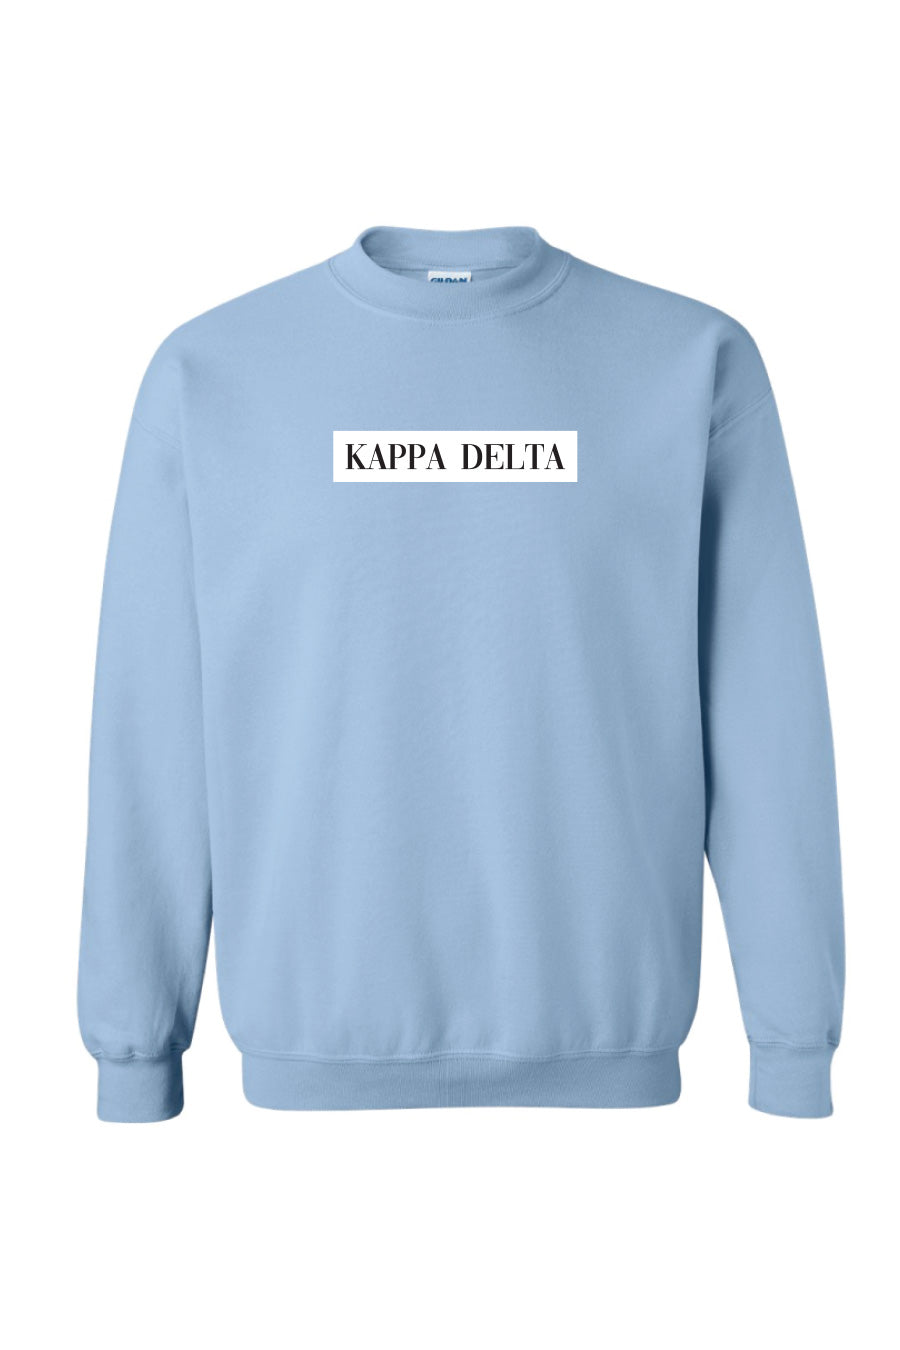 Introducing the New Kappa Delta Brand - Kappa Delta